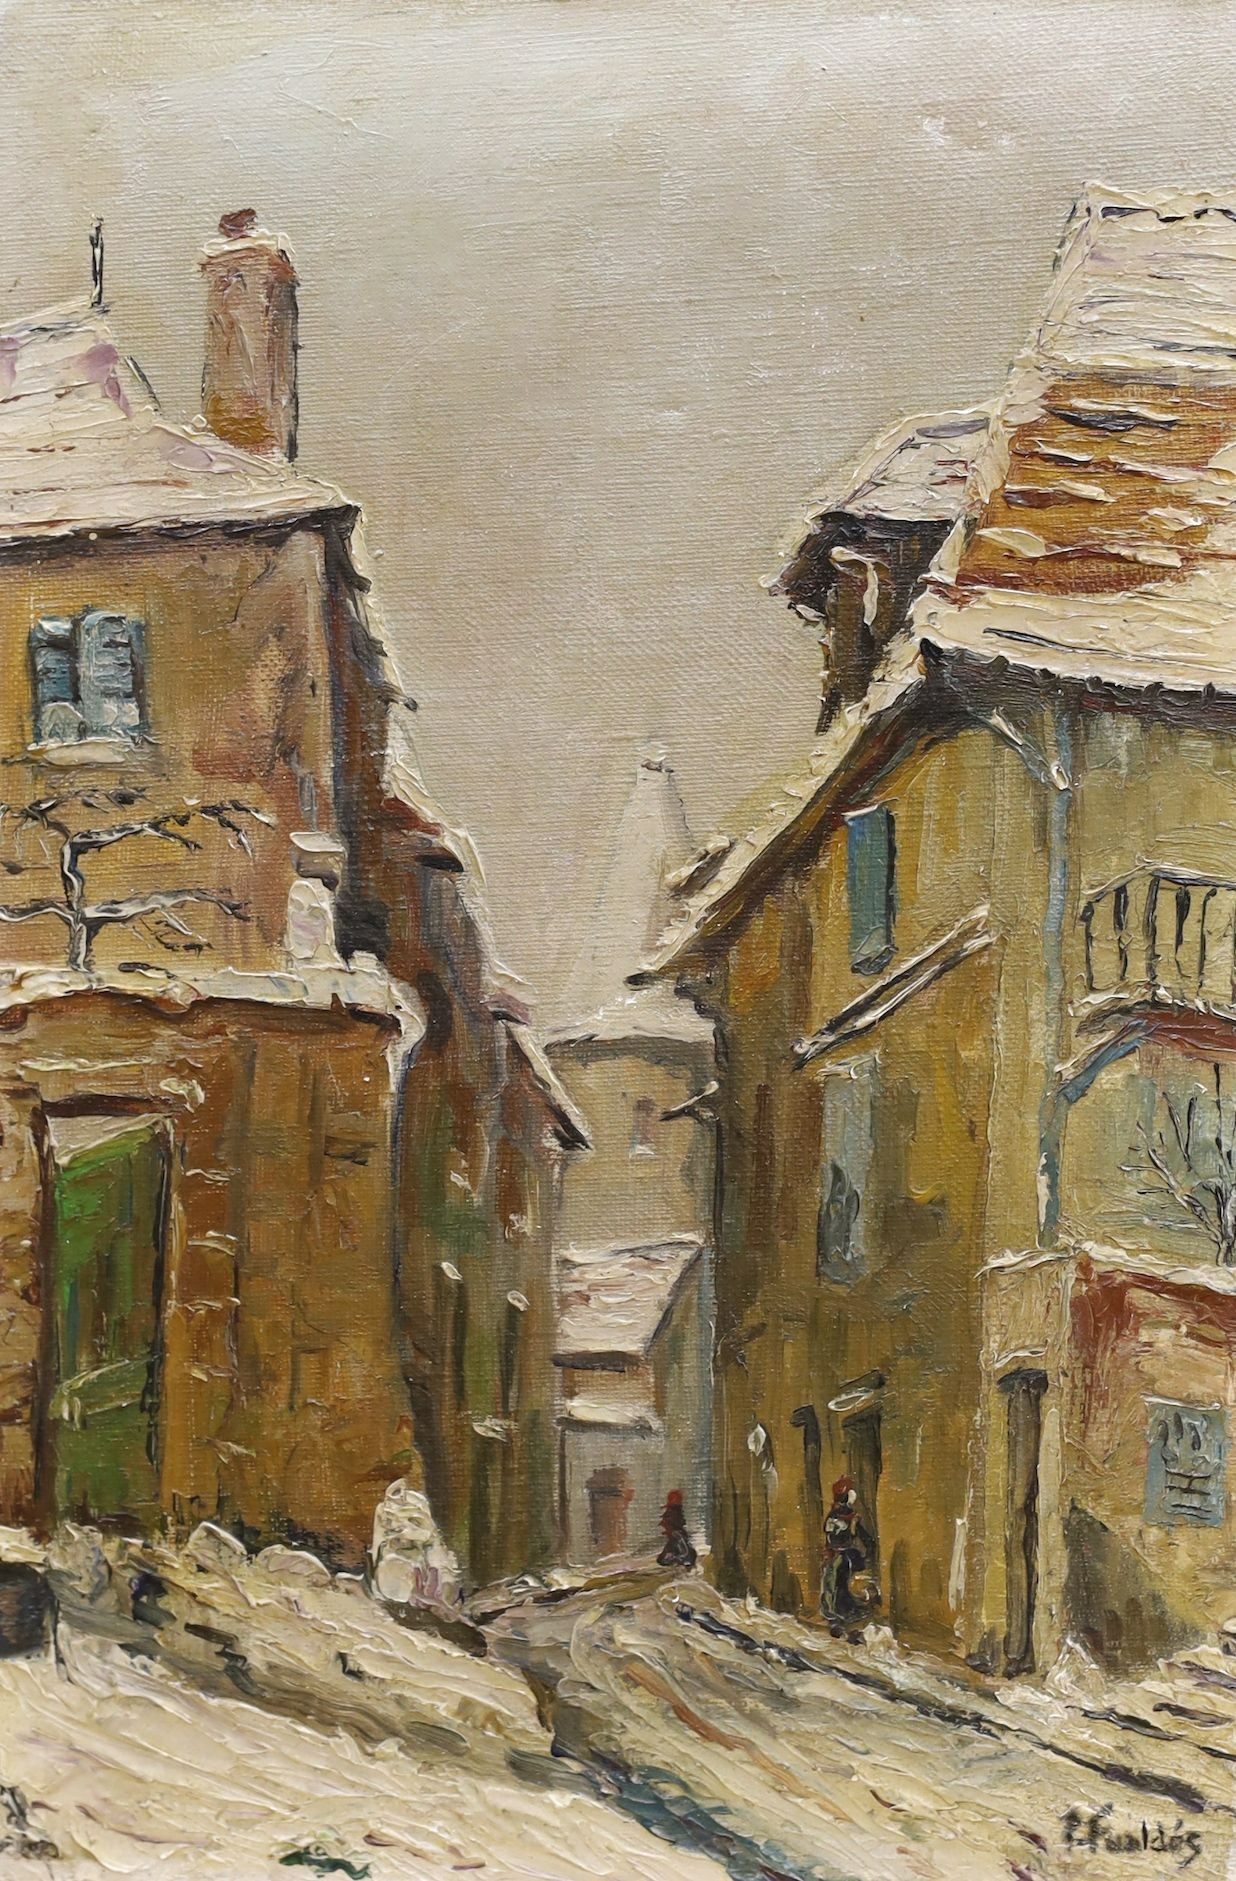 P. Fudldas, oil on canvas, Winter street scene, signed, 35 x 24cm, unframed